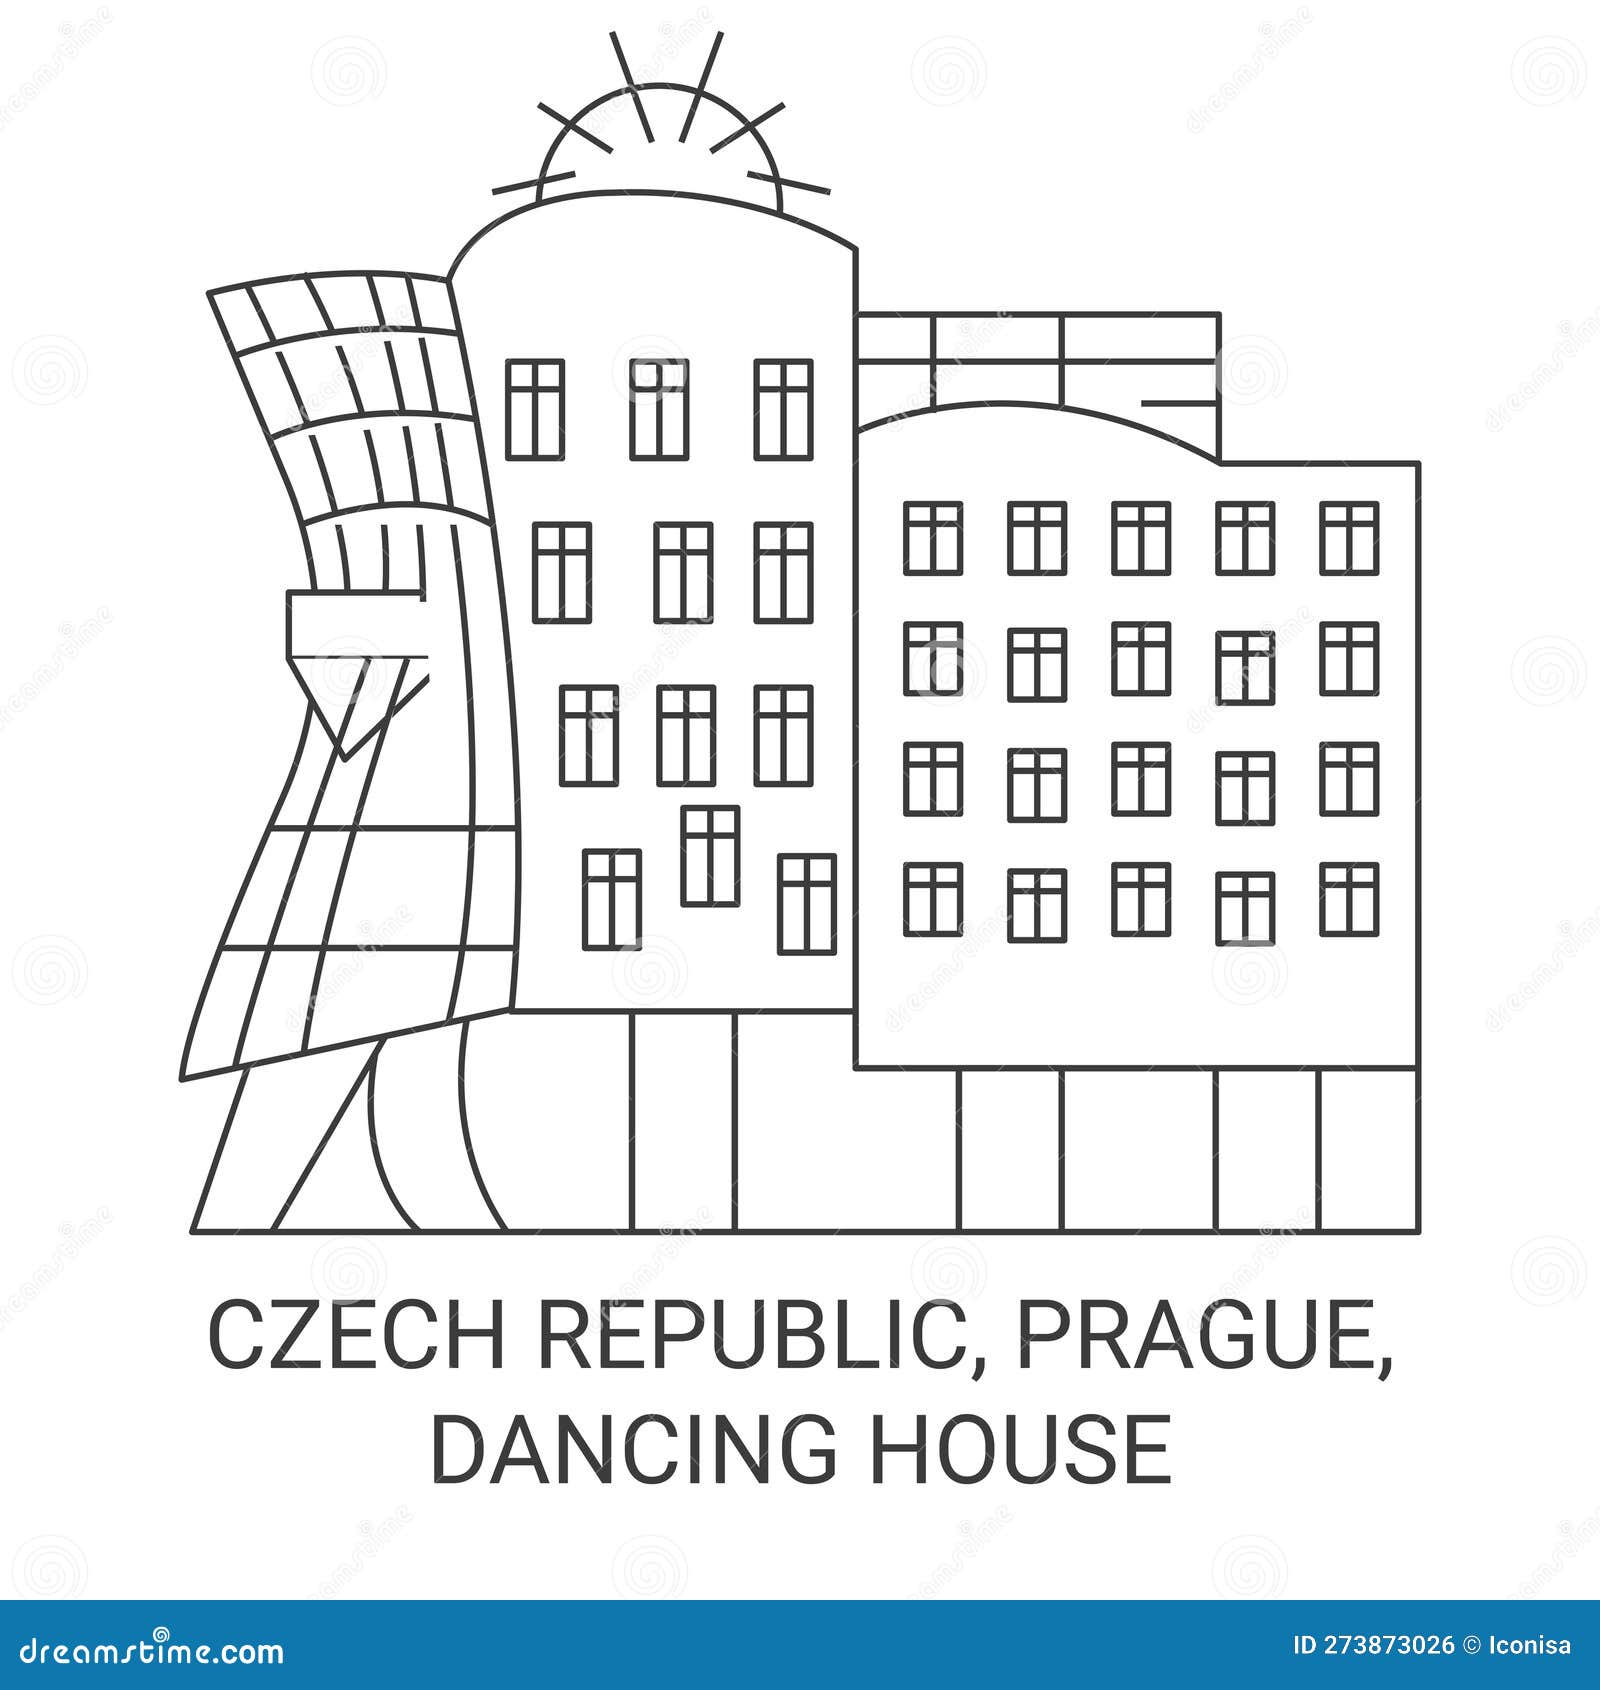 The Dancing House / PRAHA - YouTube